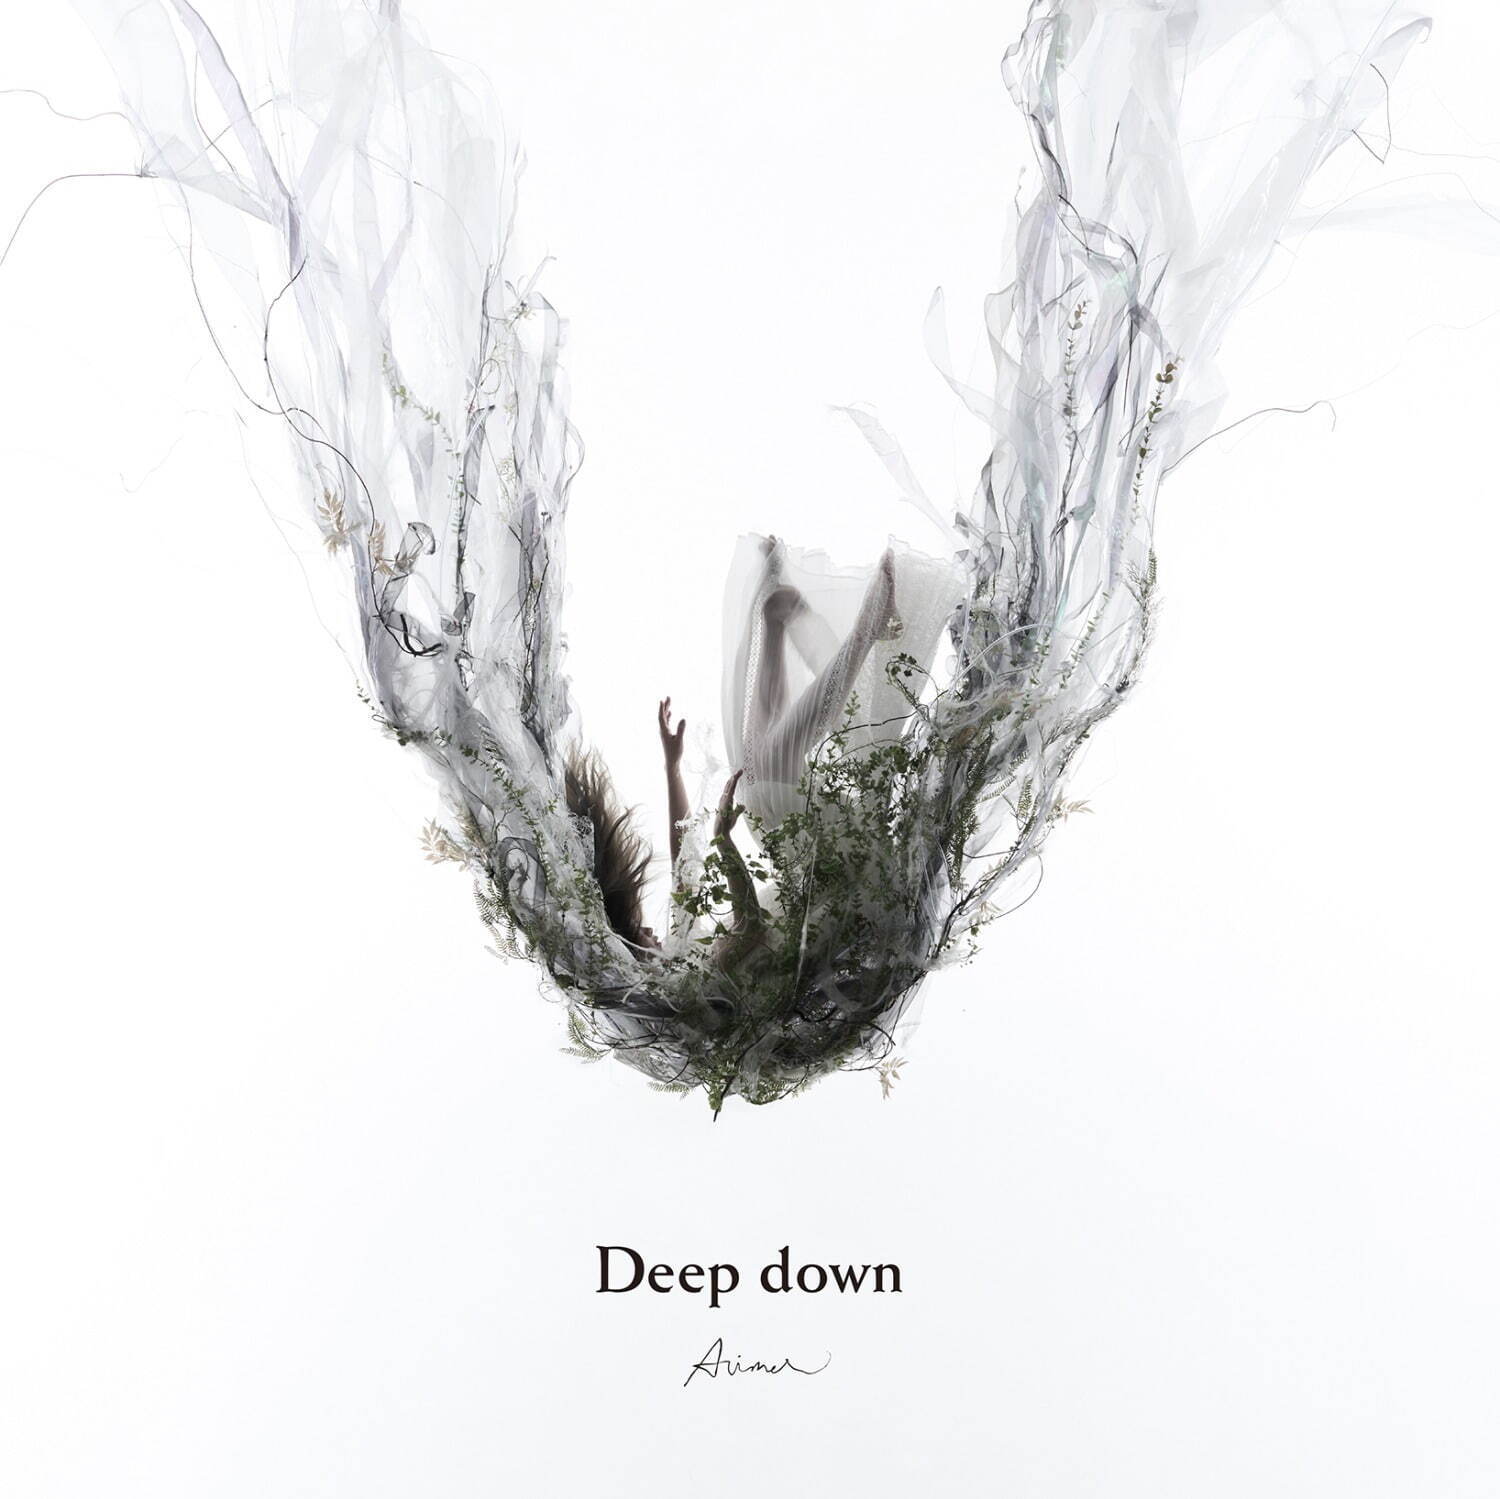 Aimer 最新ミニアルバム『Deep down』通常盤(CD) 1,980円